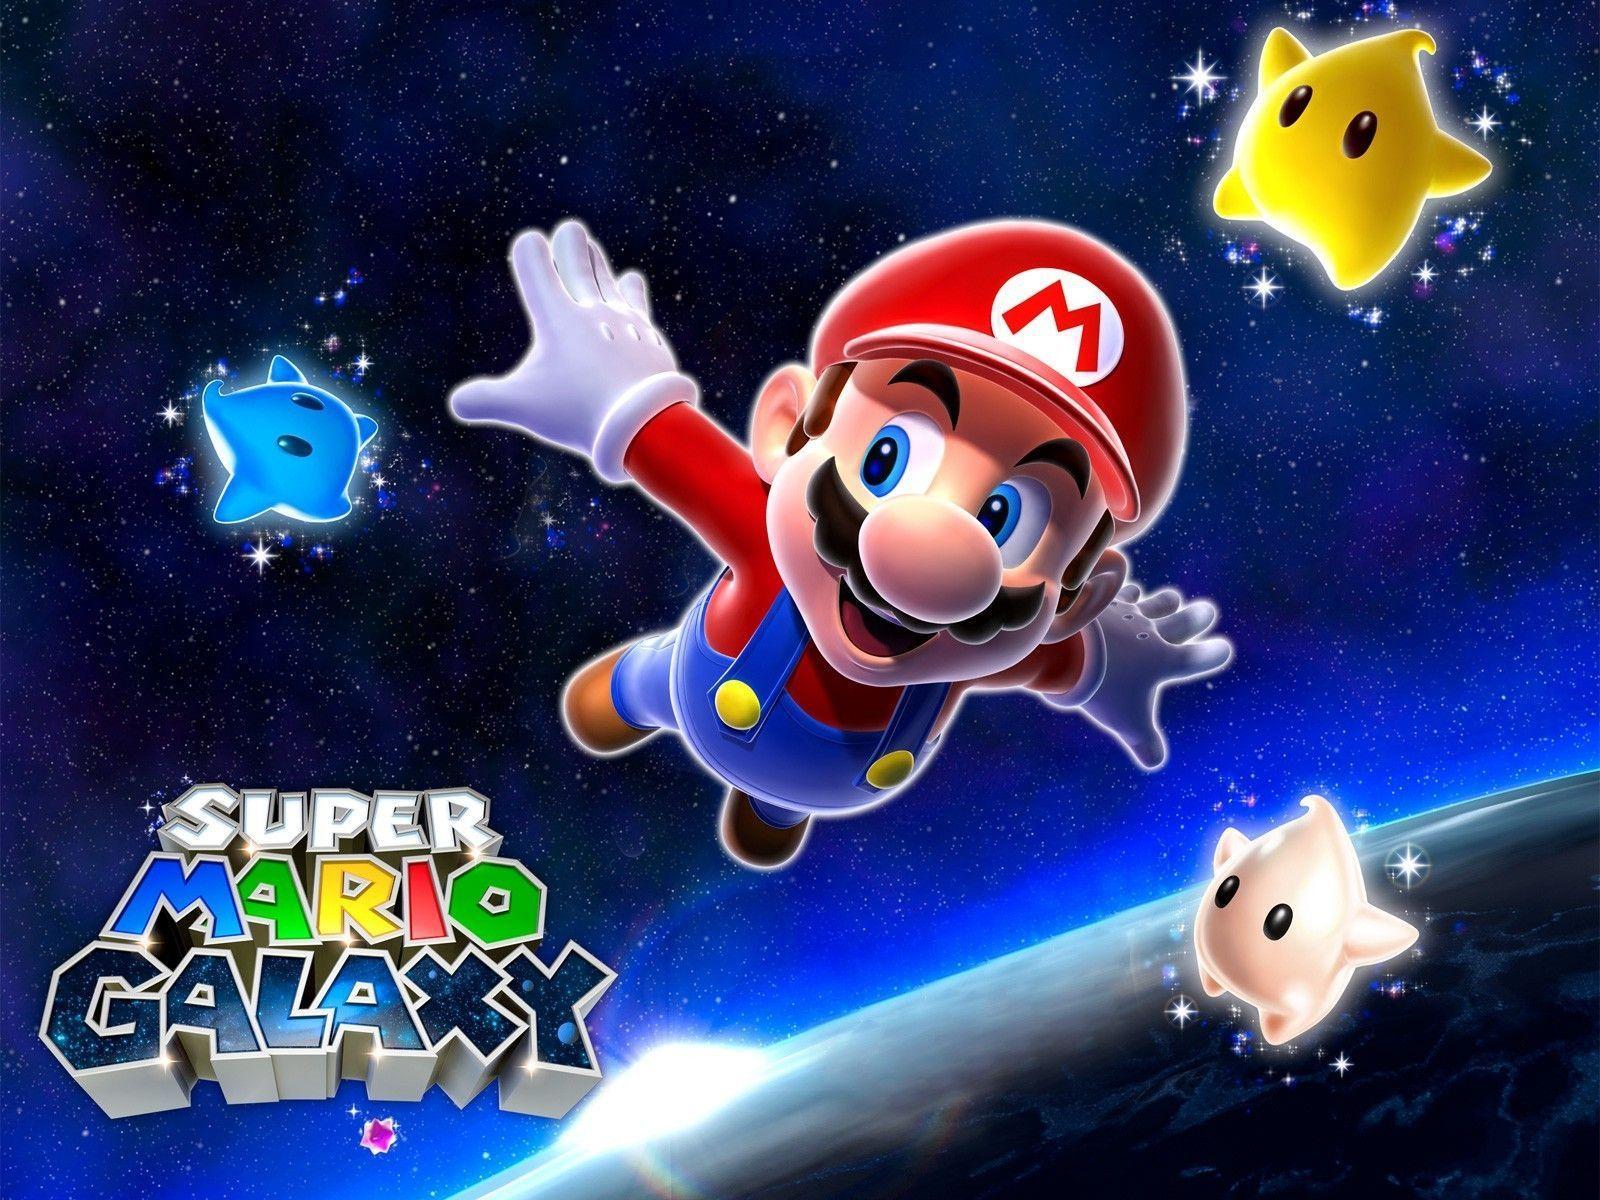 Super Mario Galaxy Games Wallpapers Free Downlo Wallpapers